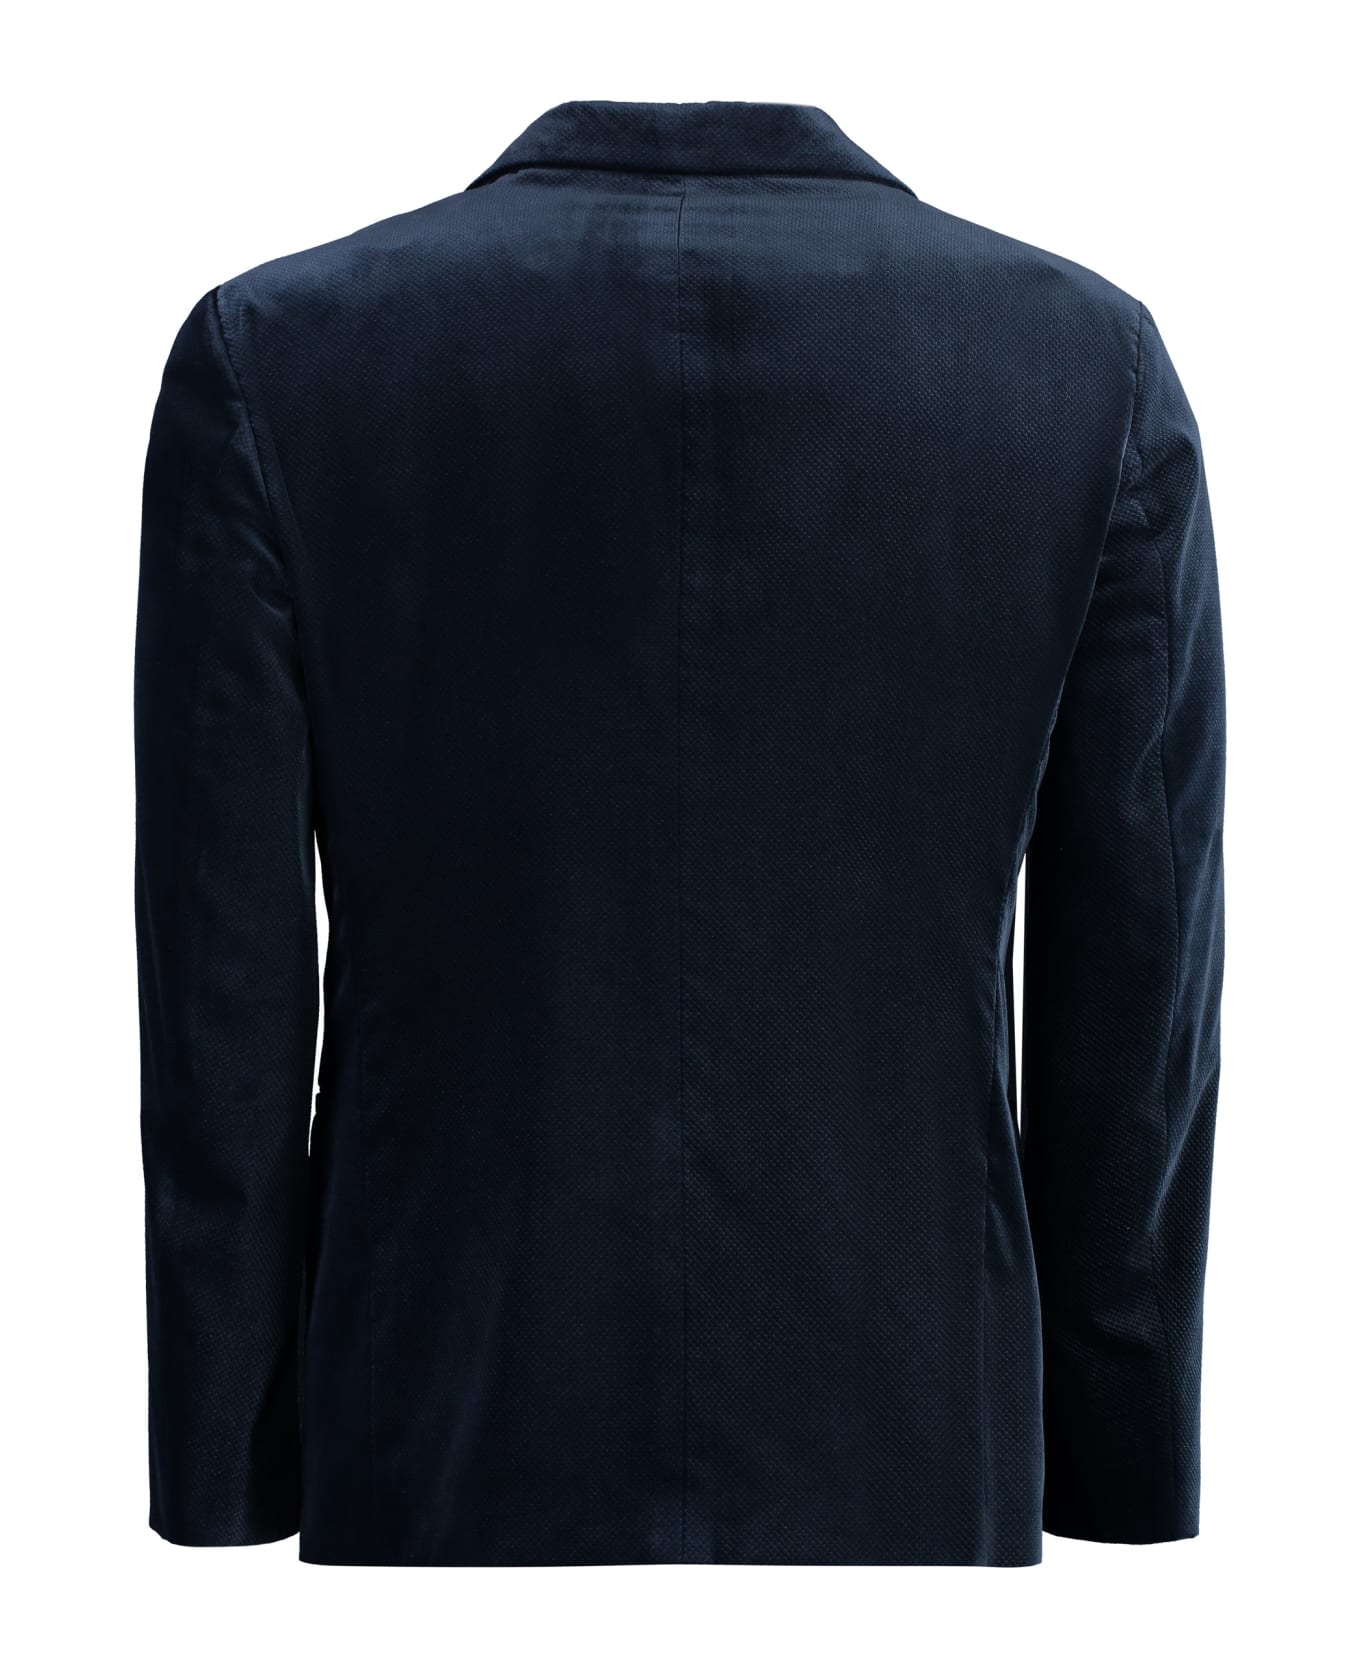 Giorgio Armani Single-breasted Velvet Jacket - blue